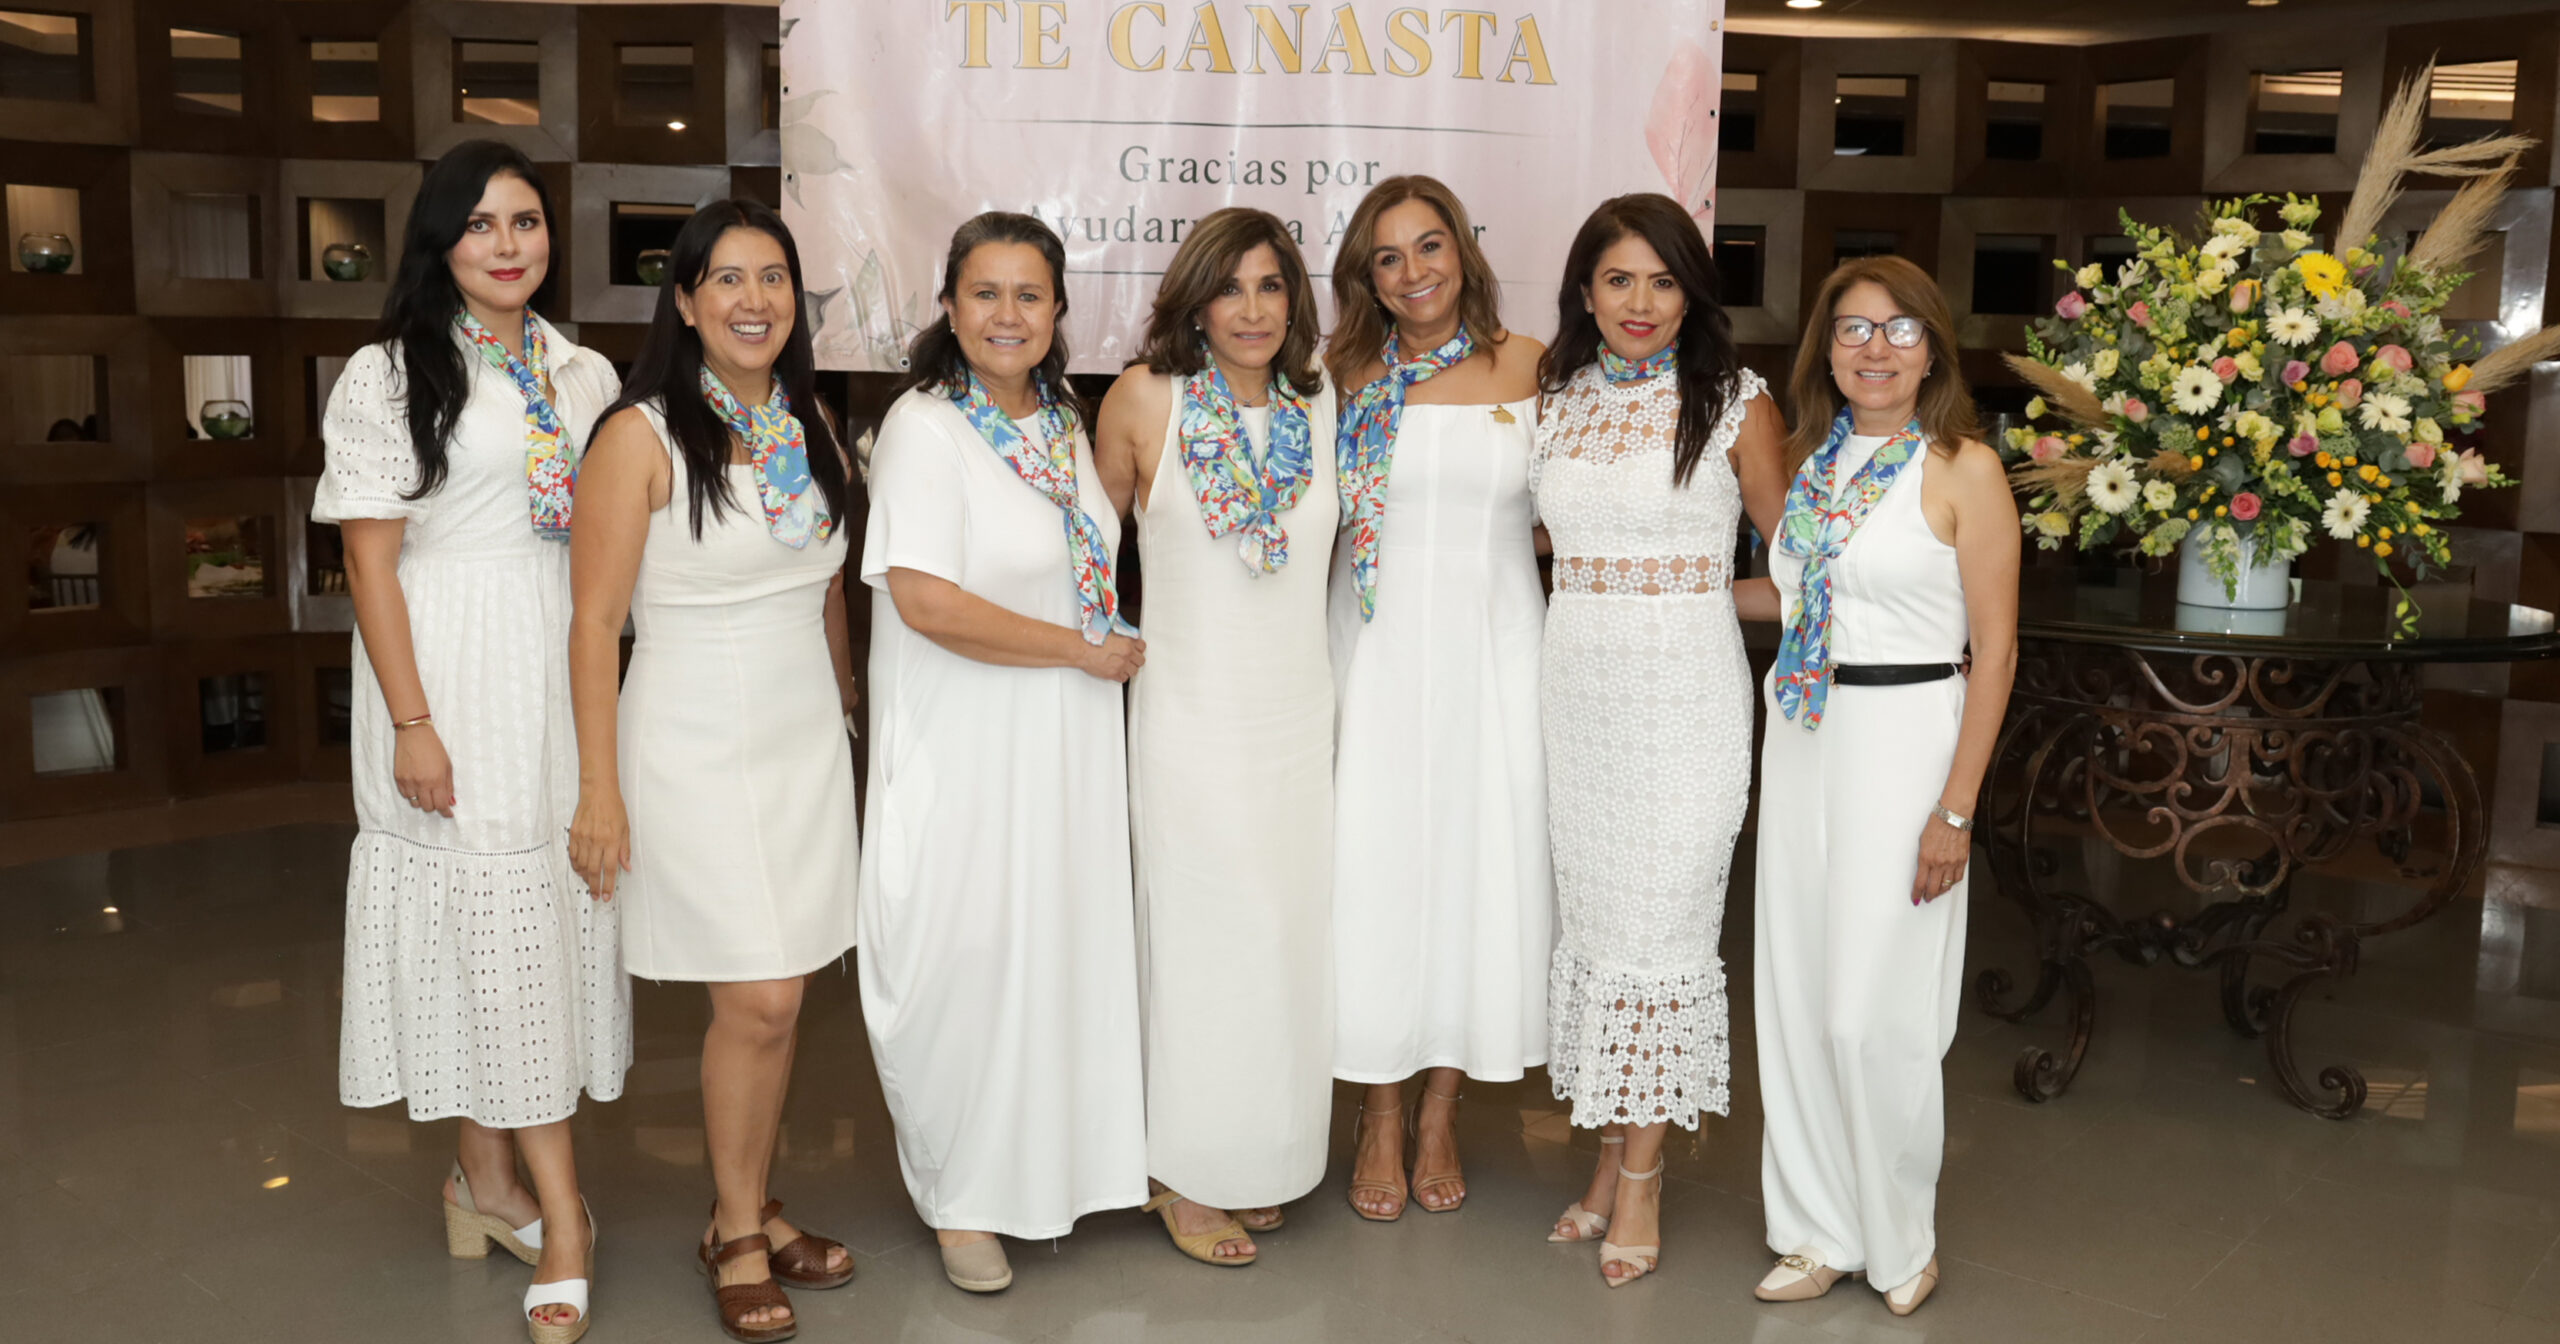 Evento a beneficio Tu Canasta, Ayúdanos a ayudar, en Torreón.